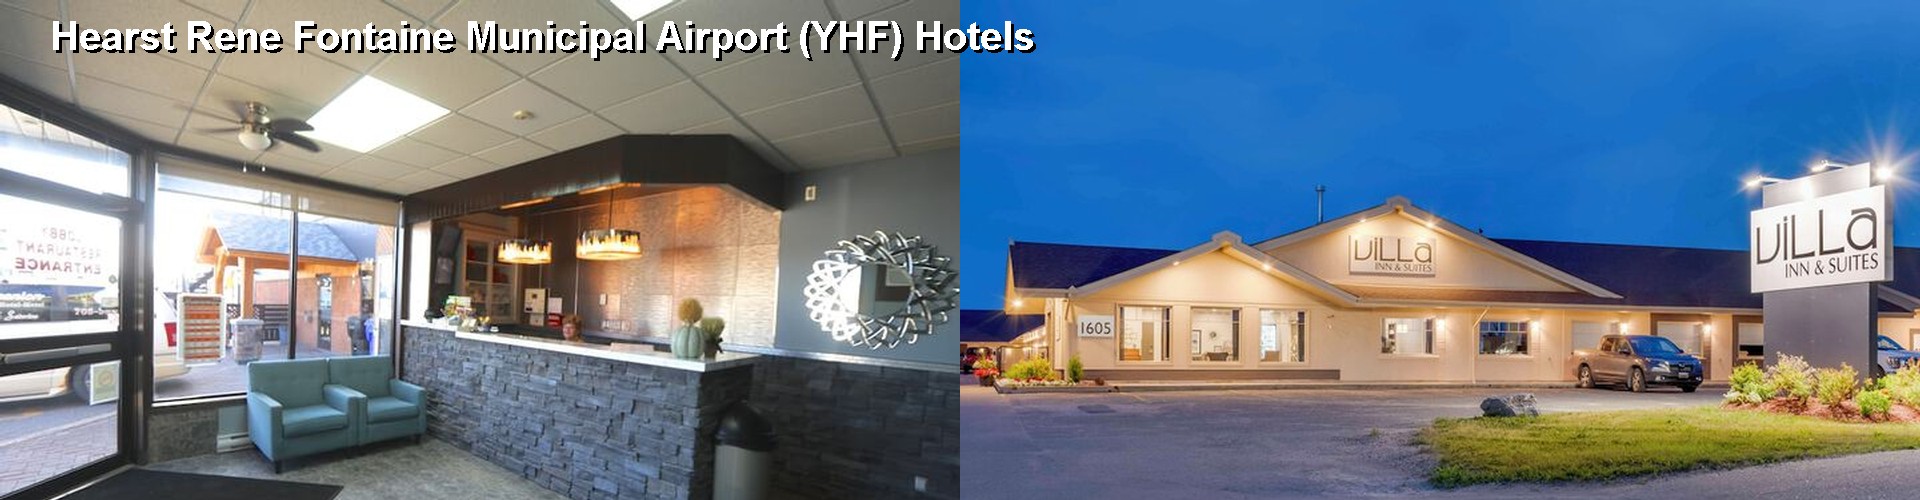 1 Best Hotels near Hearst Rene Fontaine Municipal Airport (YHF)